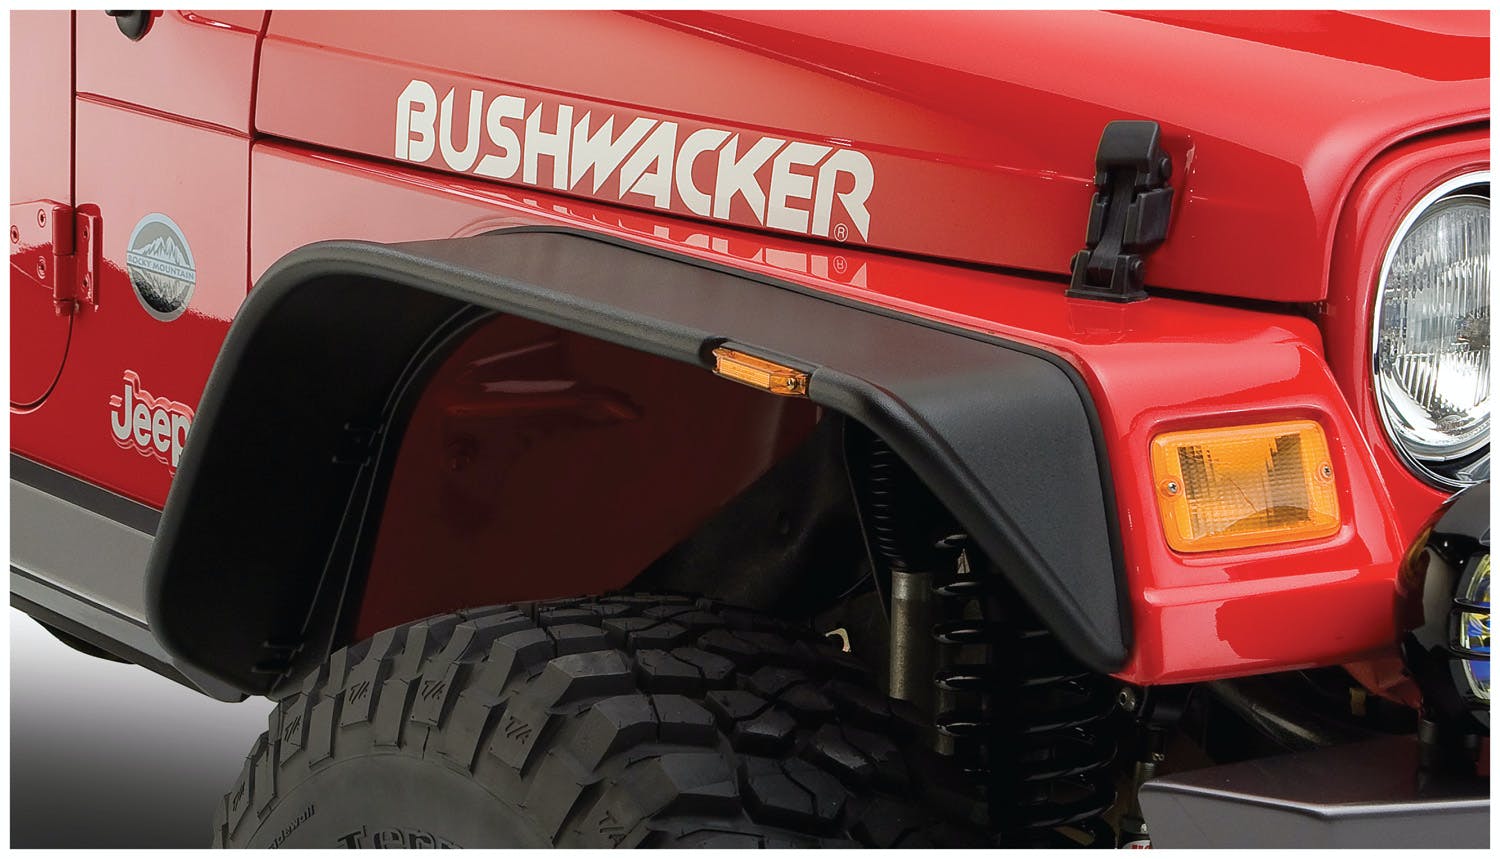 Bushwacker 10920-07 Flat Style Jeep Fender Flares, 4pc